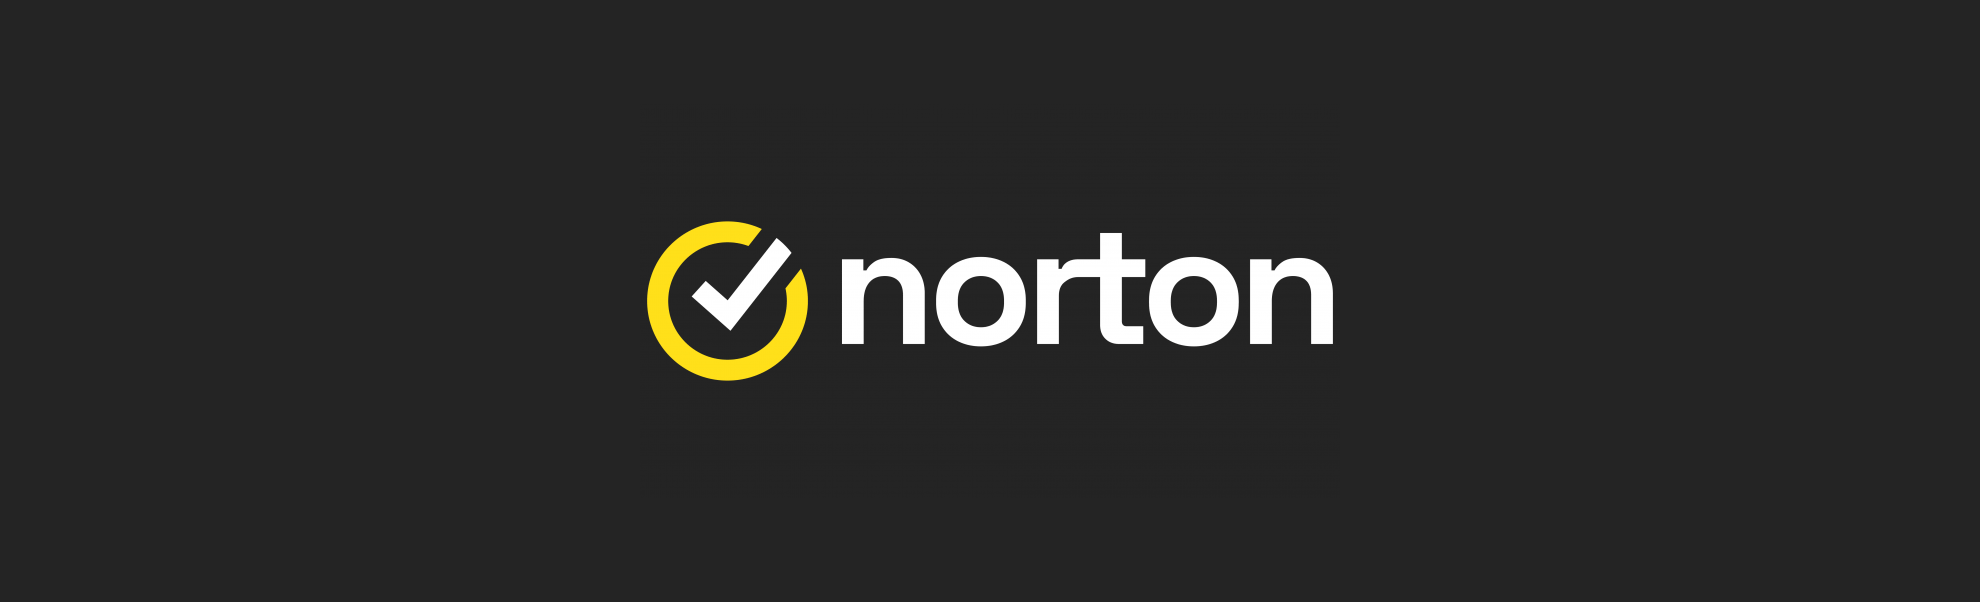 Logo Norton w kontrze